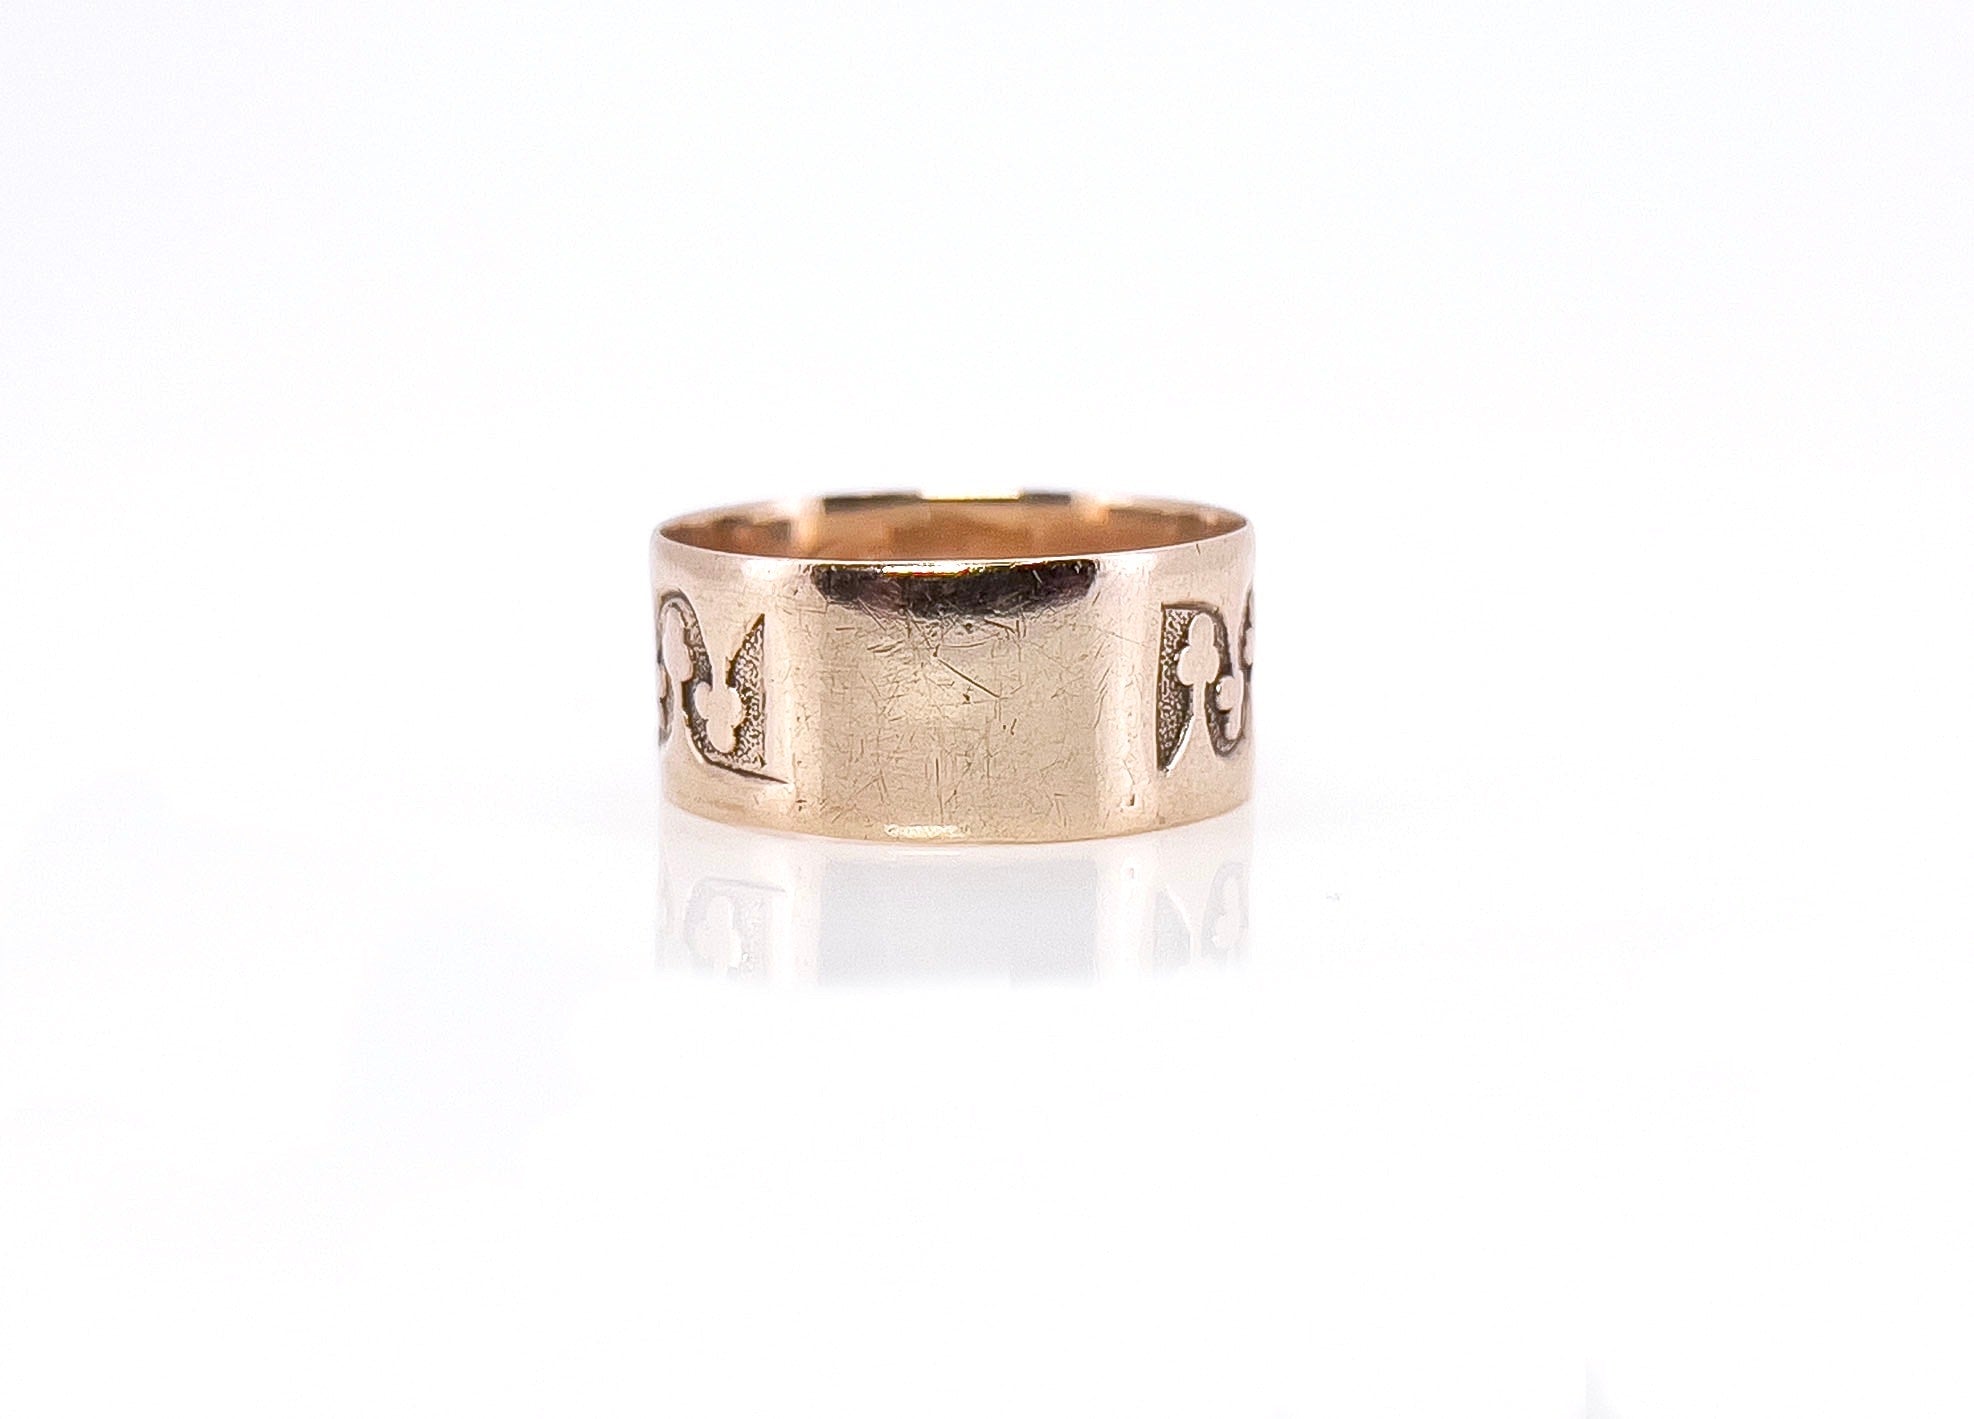 Victorian Ring, Amelia L. Bean, 10K, Size 7.5